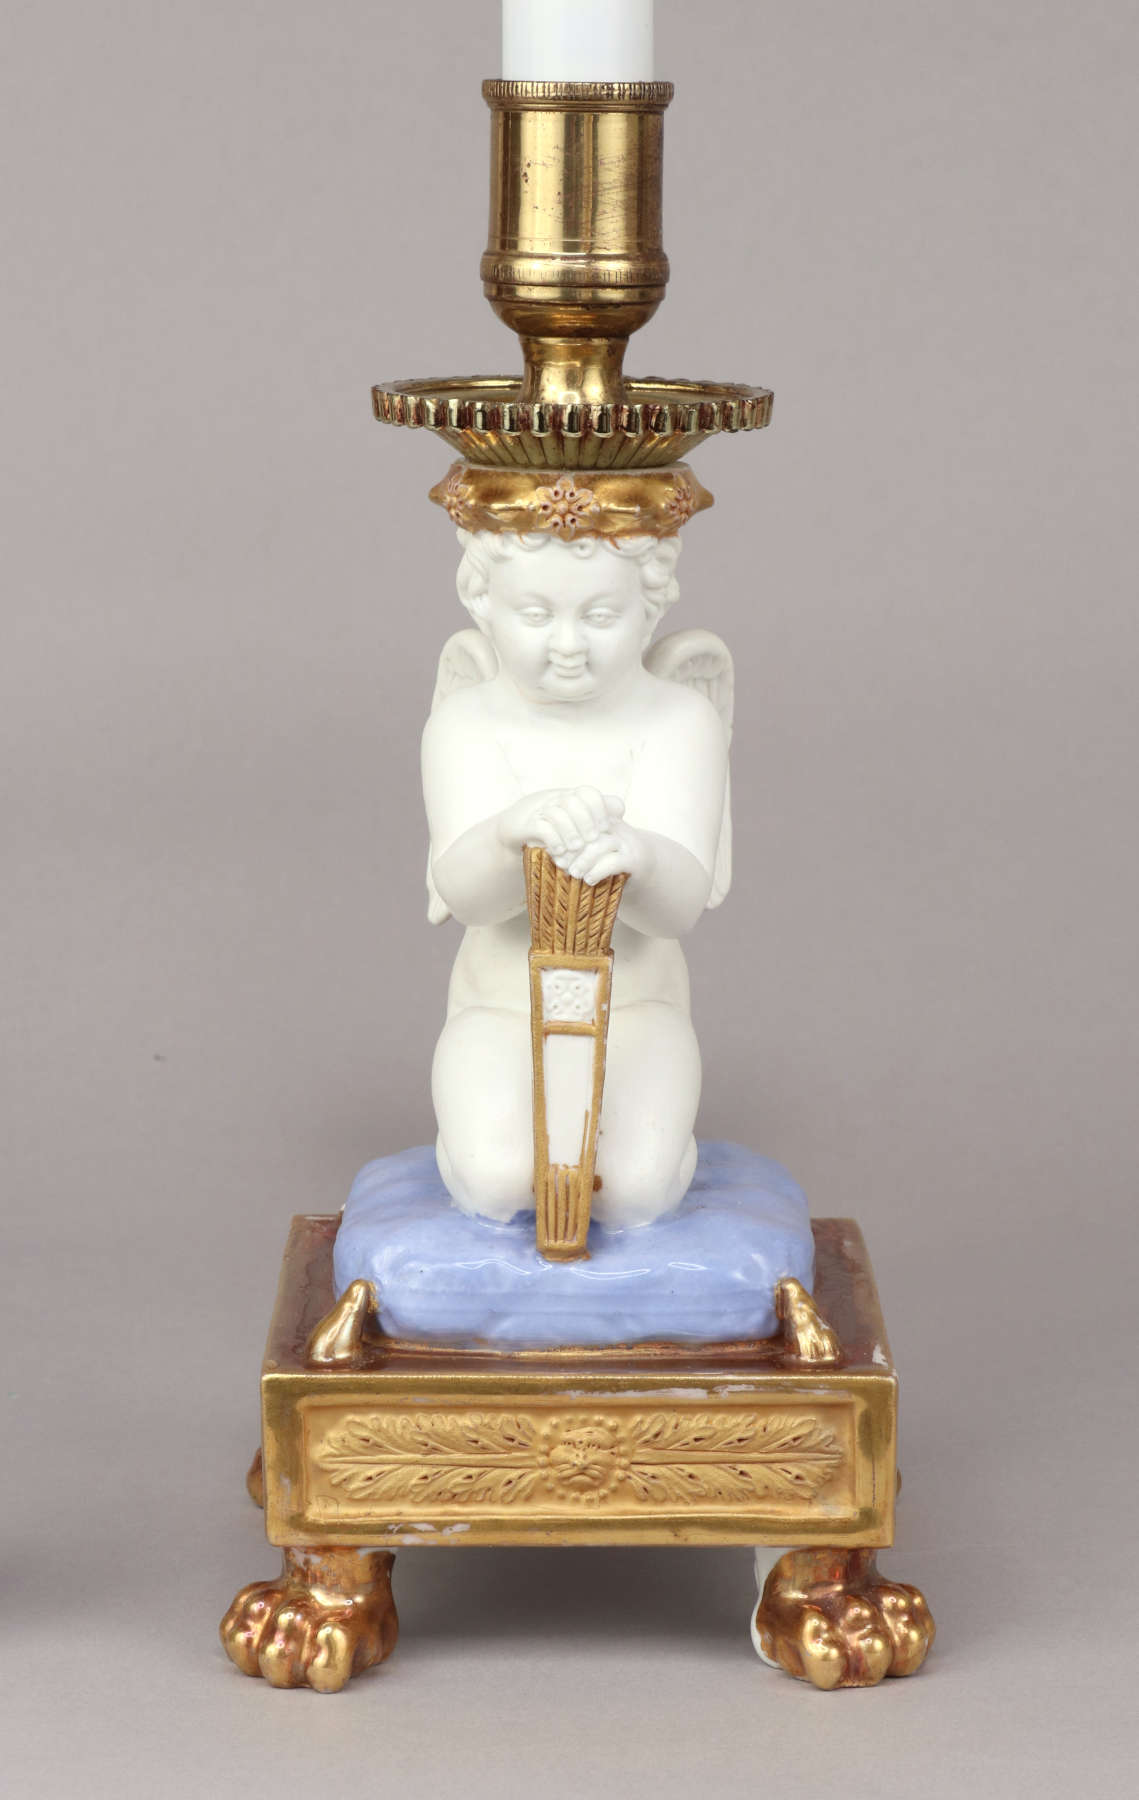 Pair of Paris Porcelain Putti Mounted as Lamps, c. 1810-20